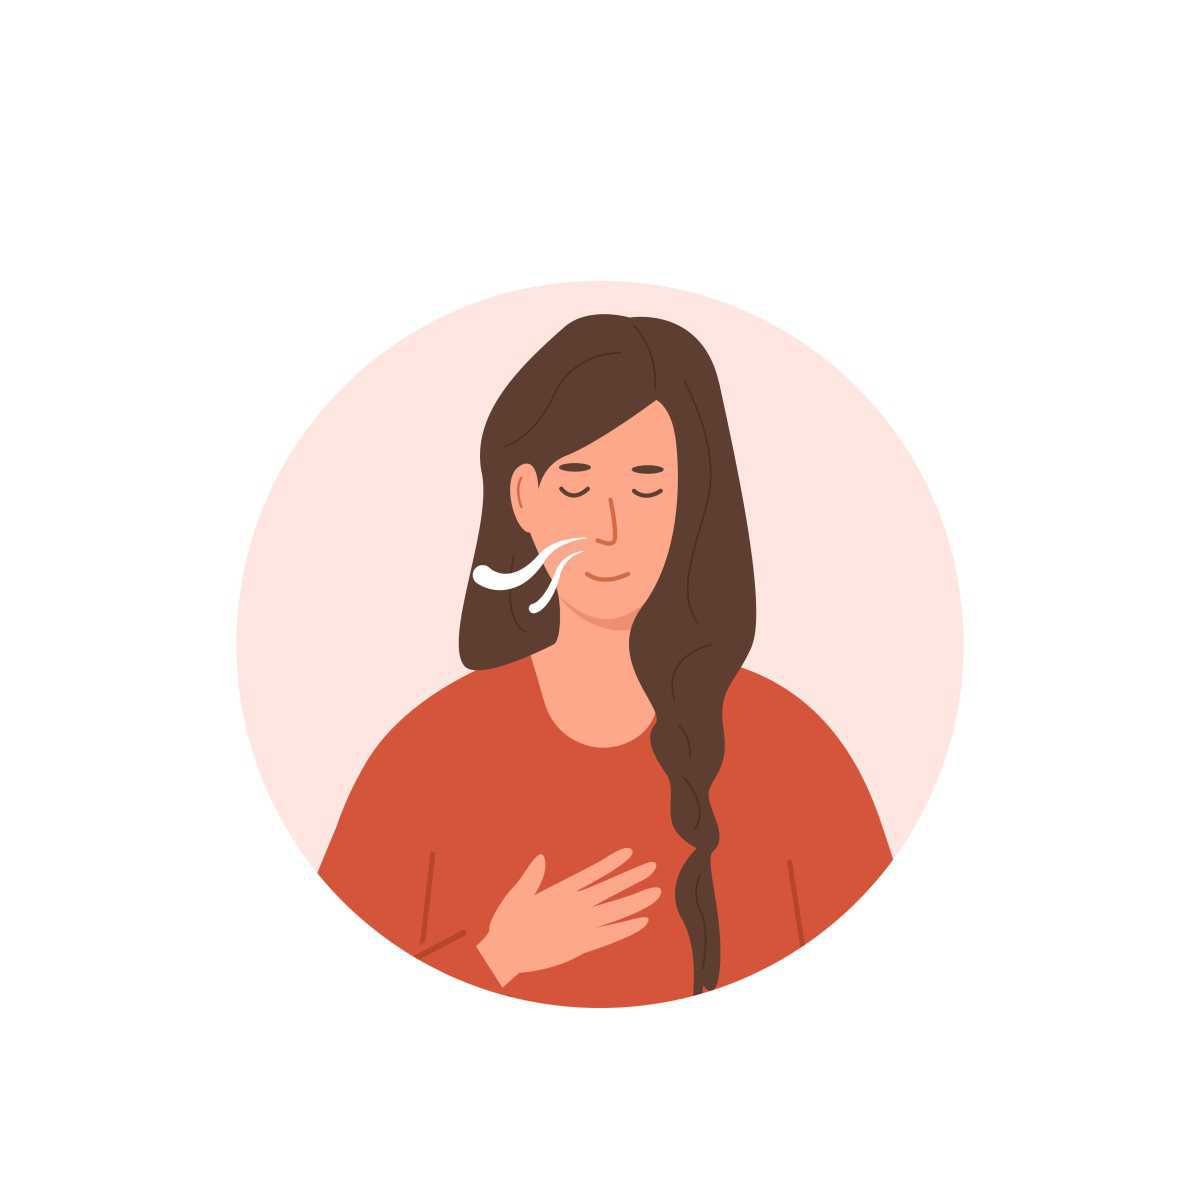 3. Aprender a respirar bem para desintoxicar profundamente